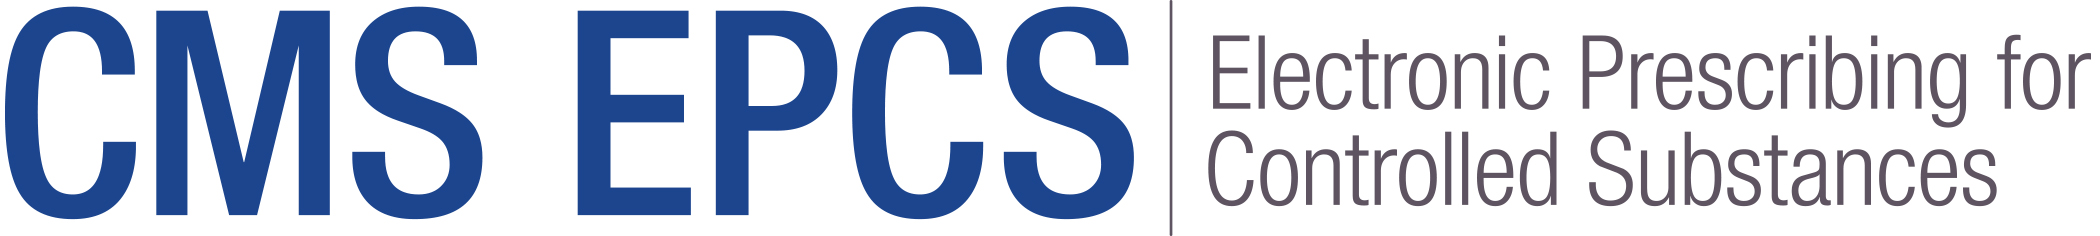 CMS Electronic Prescribing for Controlled Substances (EPCS) Program